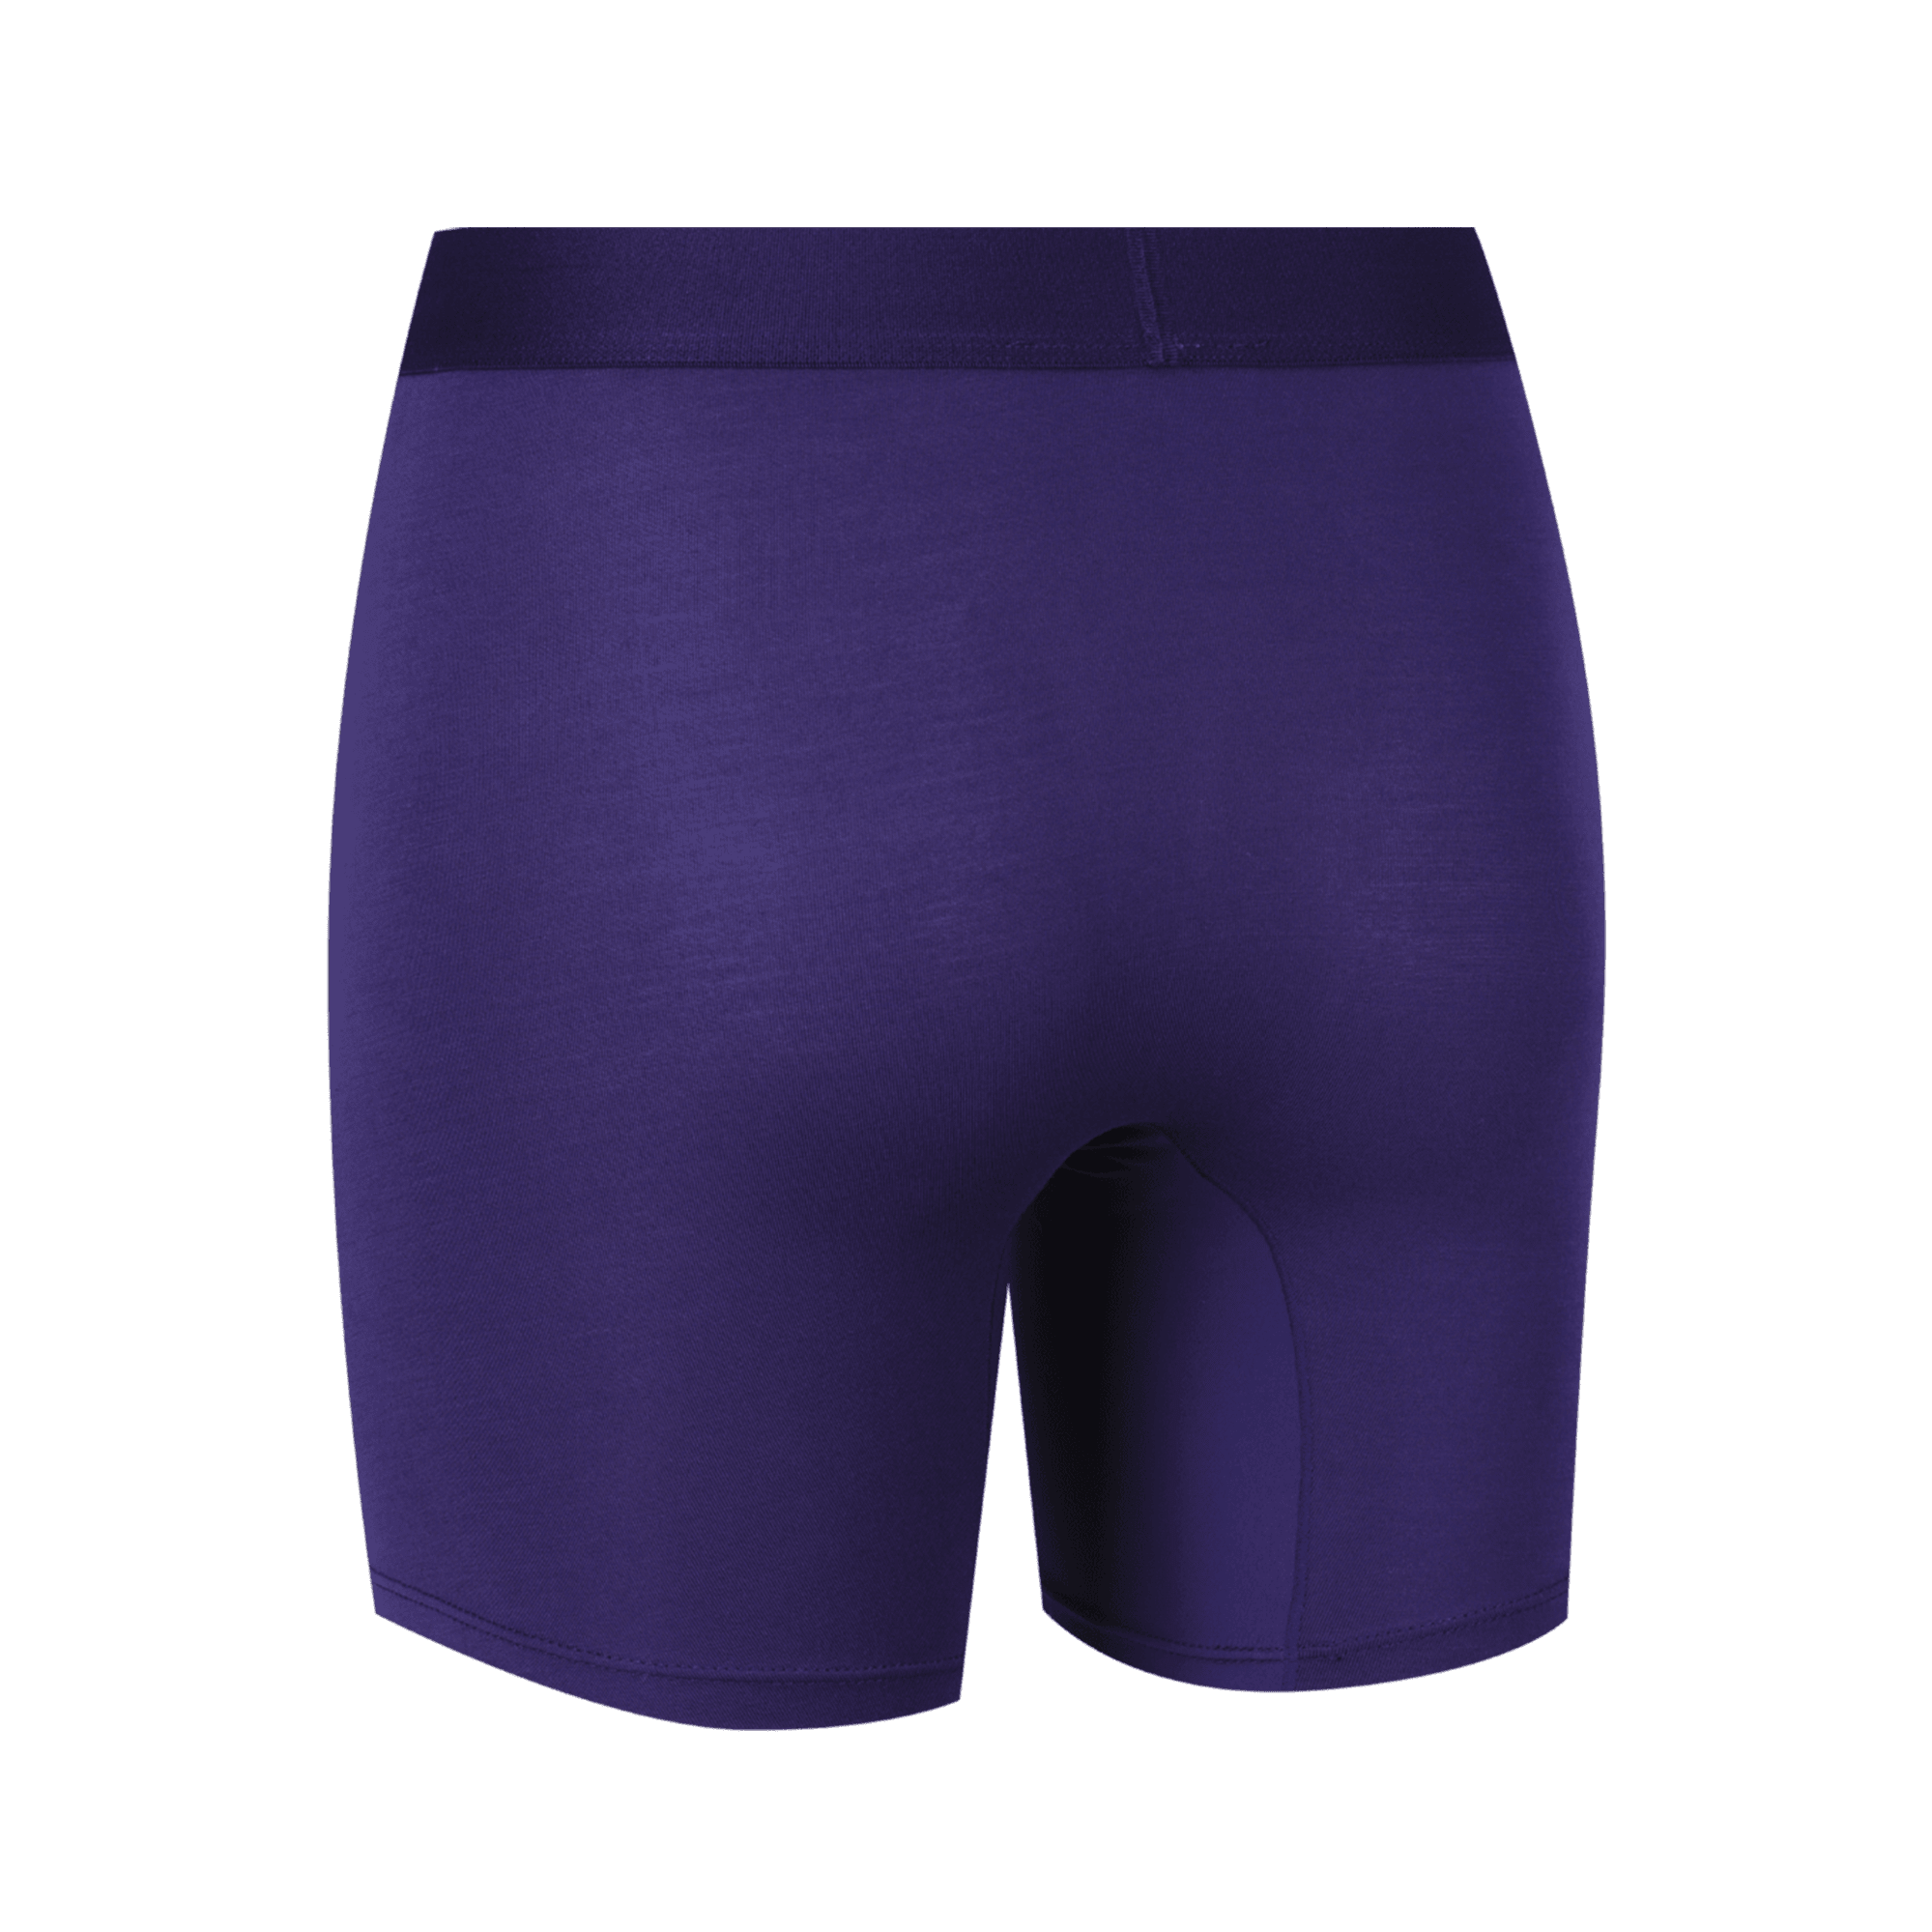 Women's Body Shorts - Midnight Blues